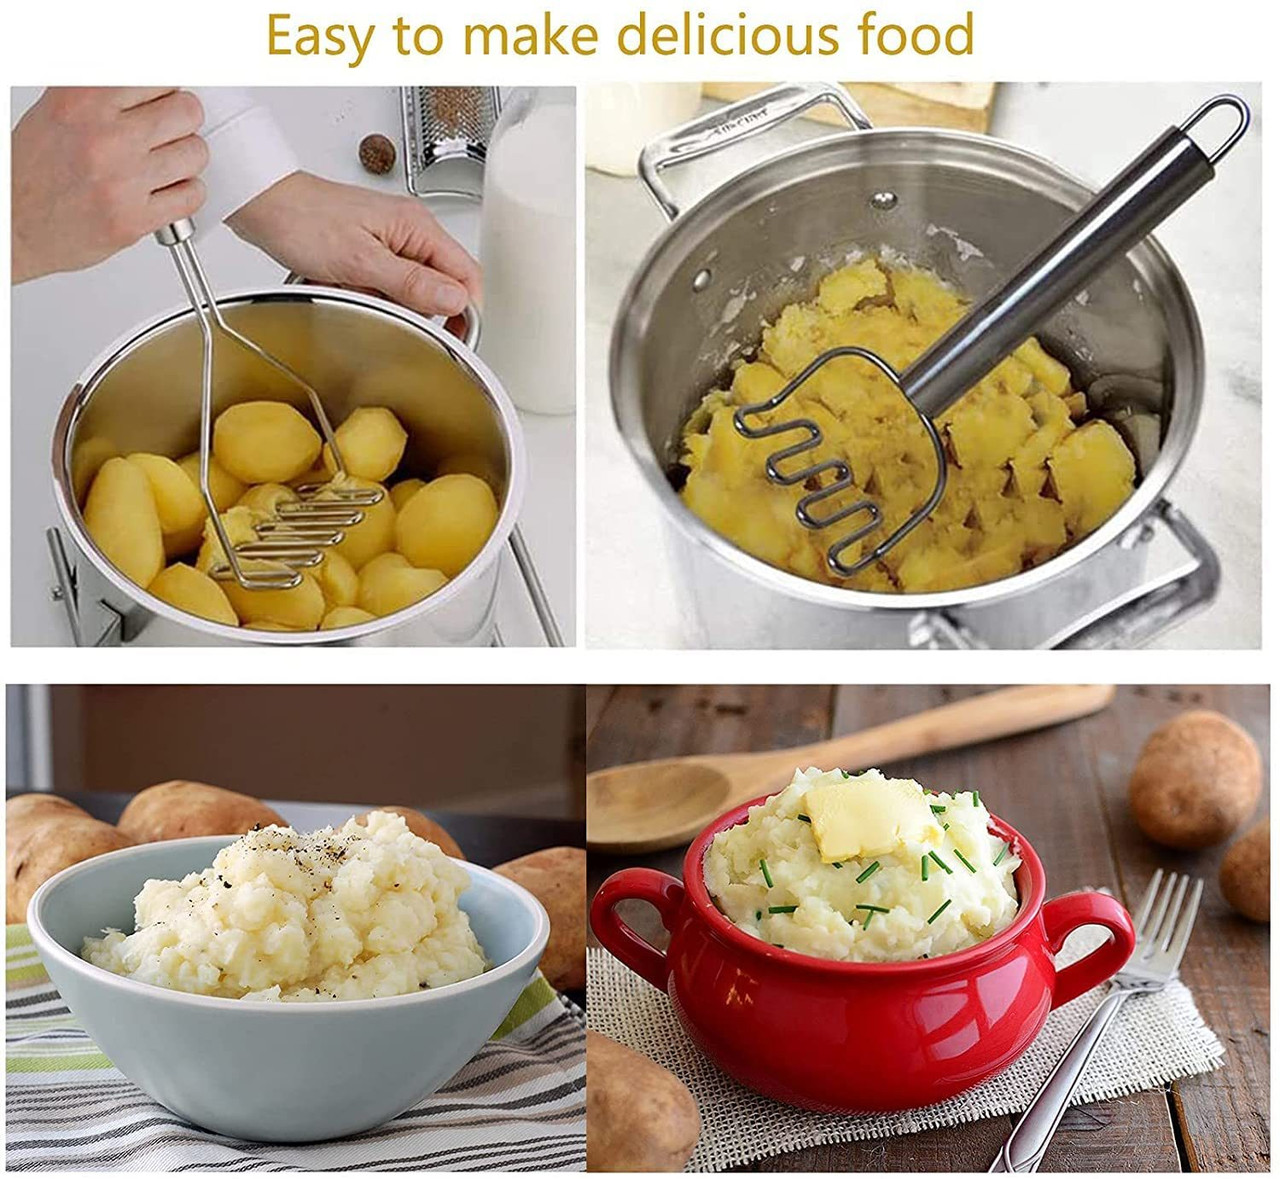 Potato Masher For Potato Ricer Baby Food Best Kitchen Tools